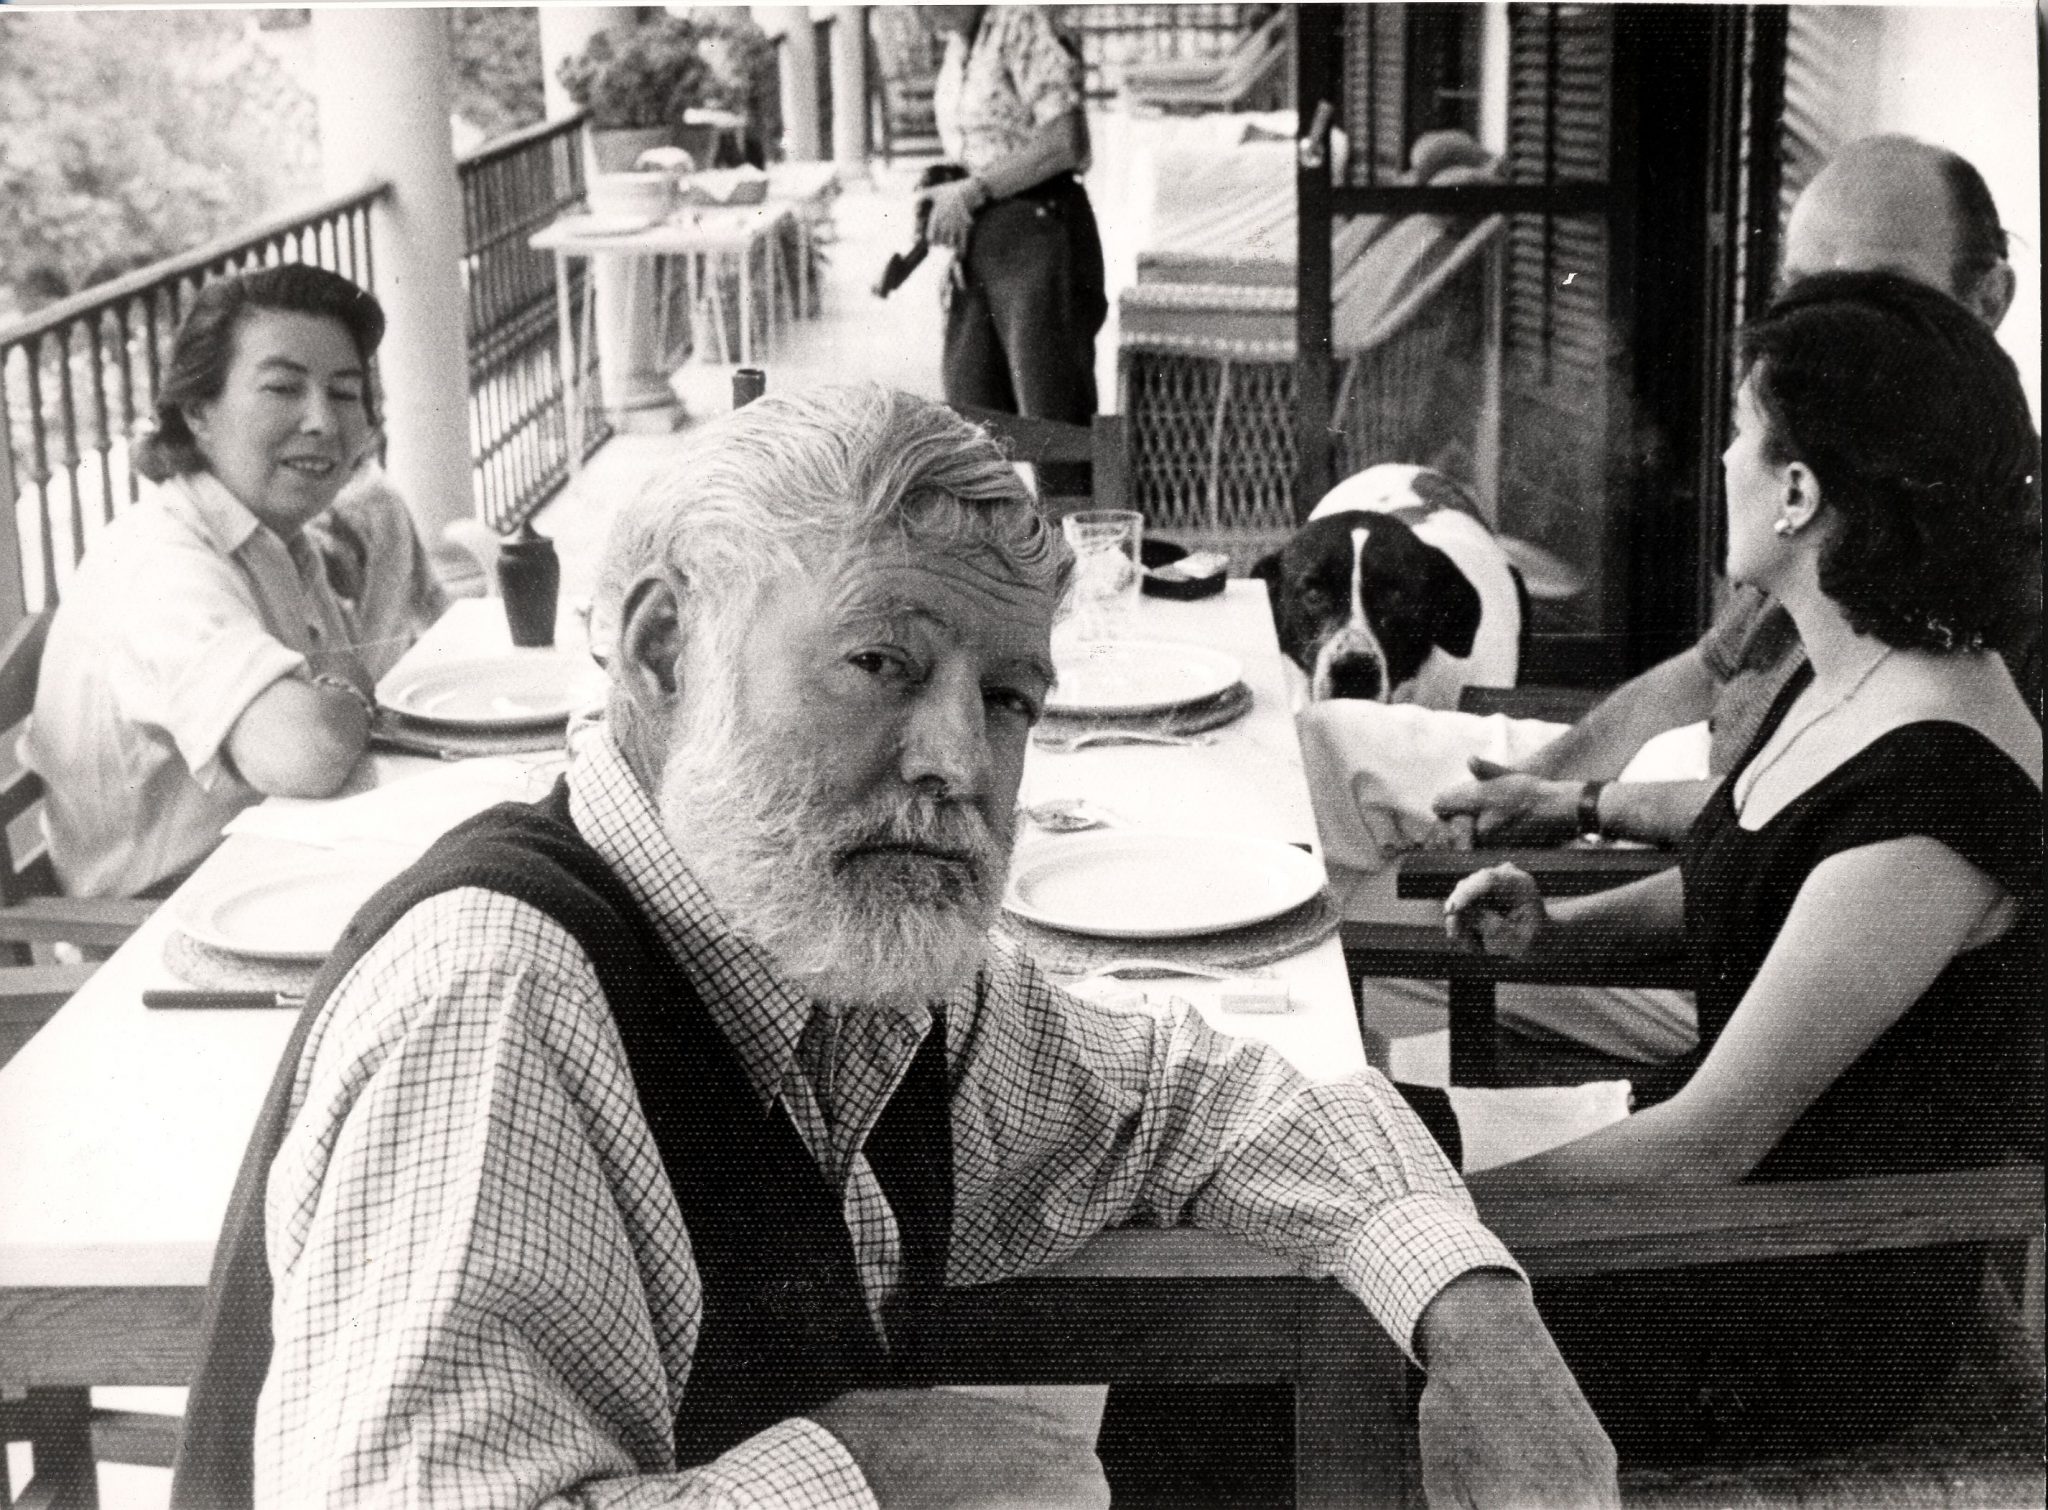 Hemingway's Top 5 Hunting and Fishing Stories